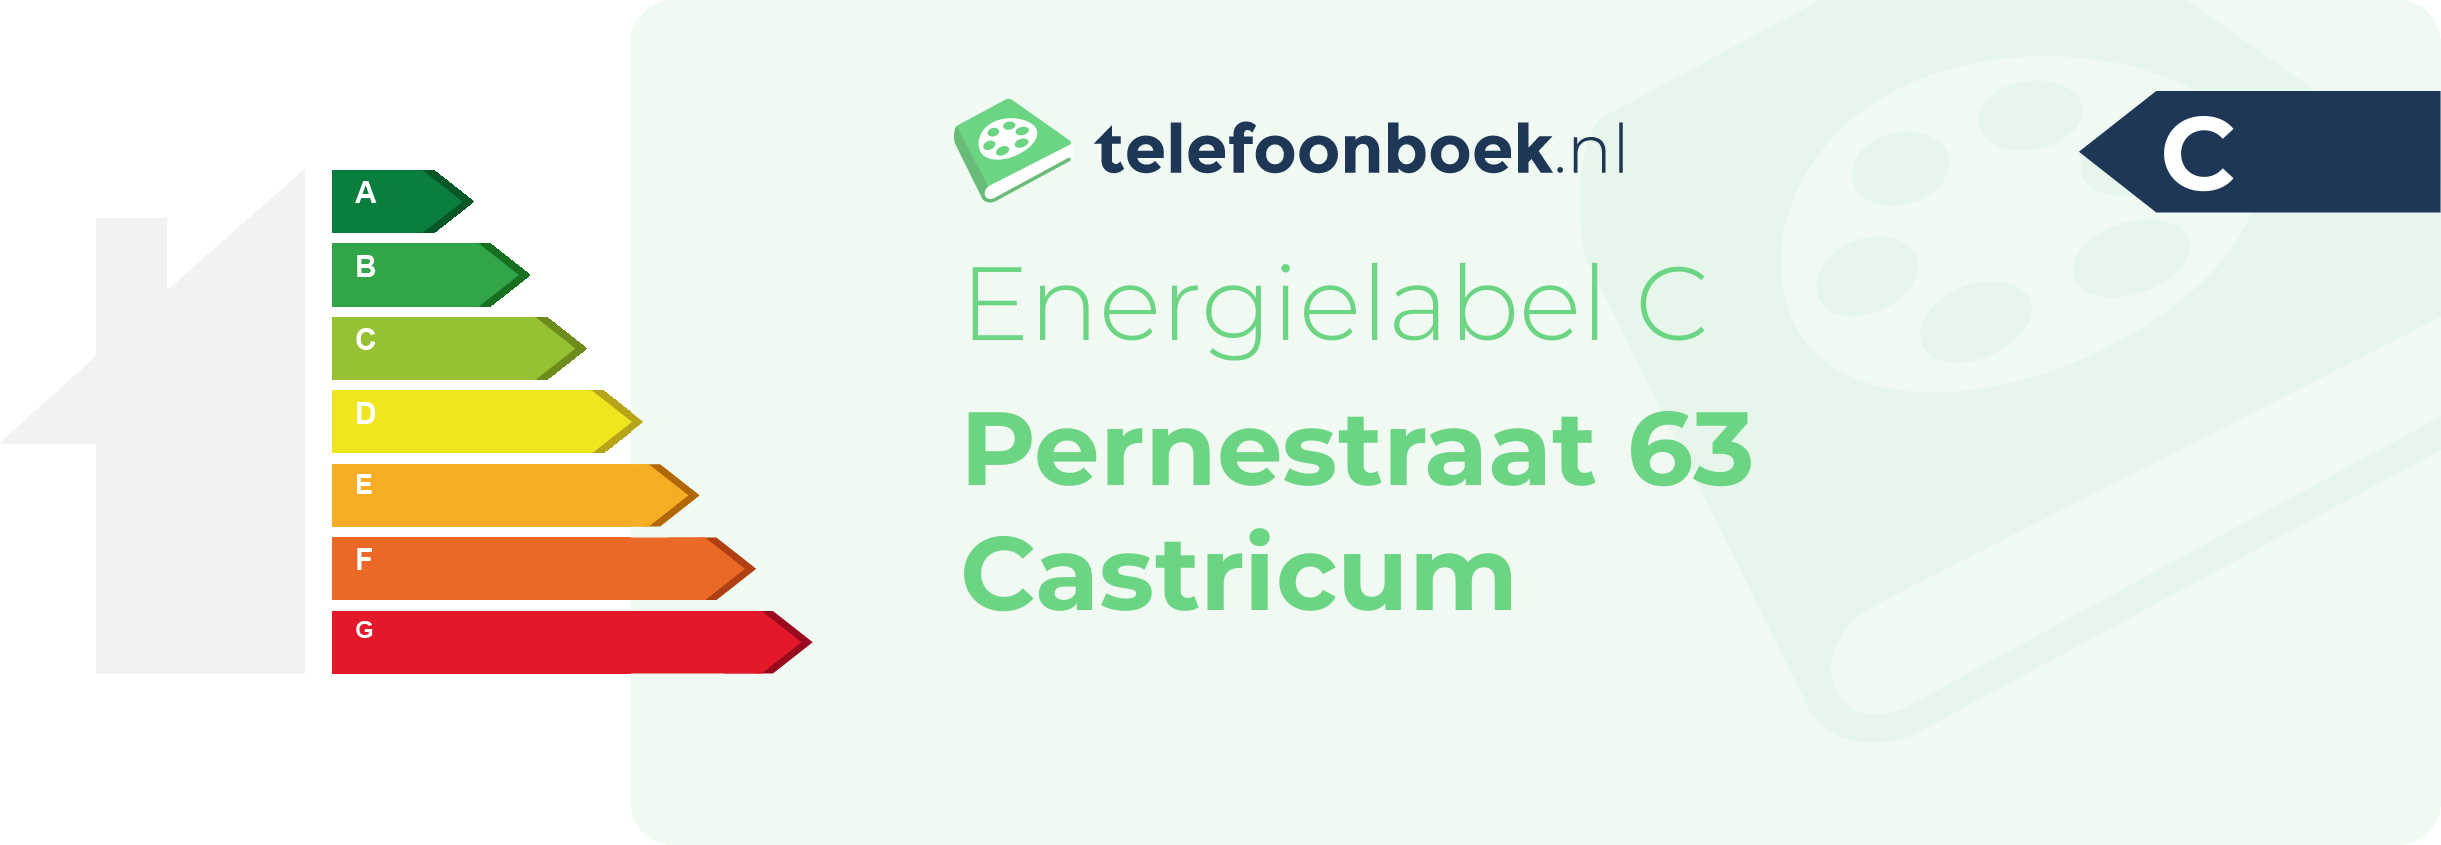 Energielabel Pernestraat 63 Castricum